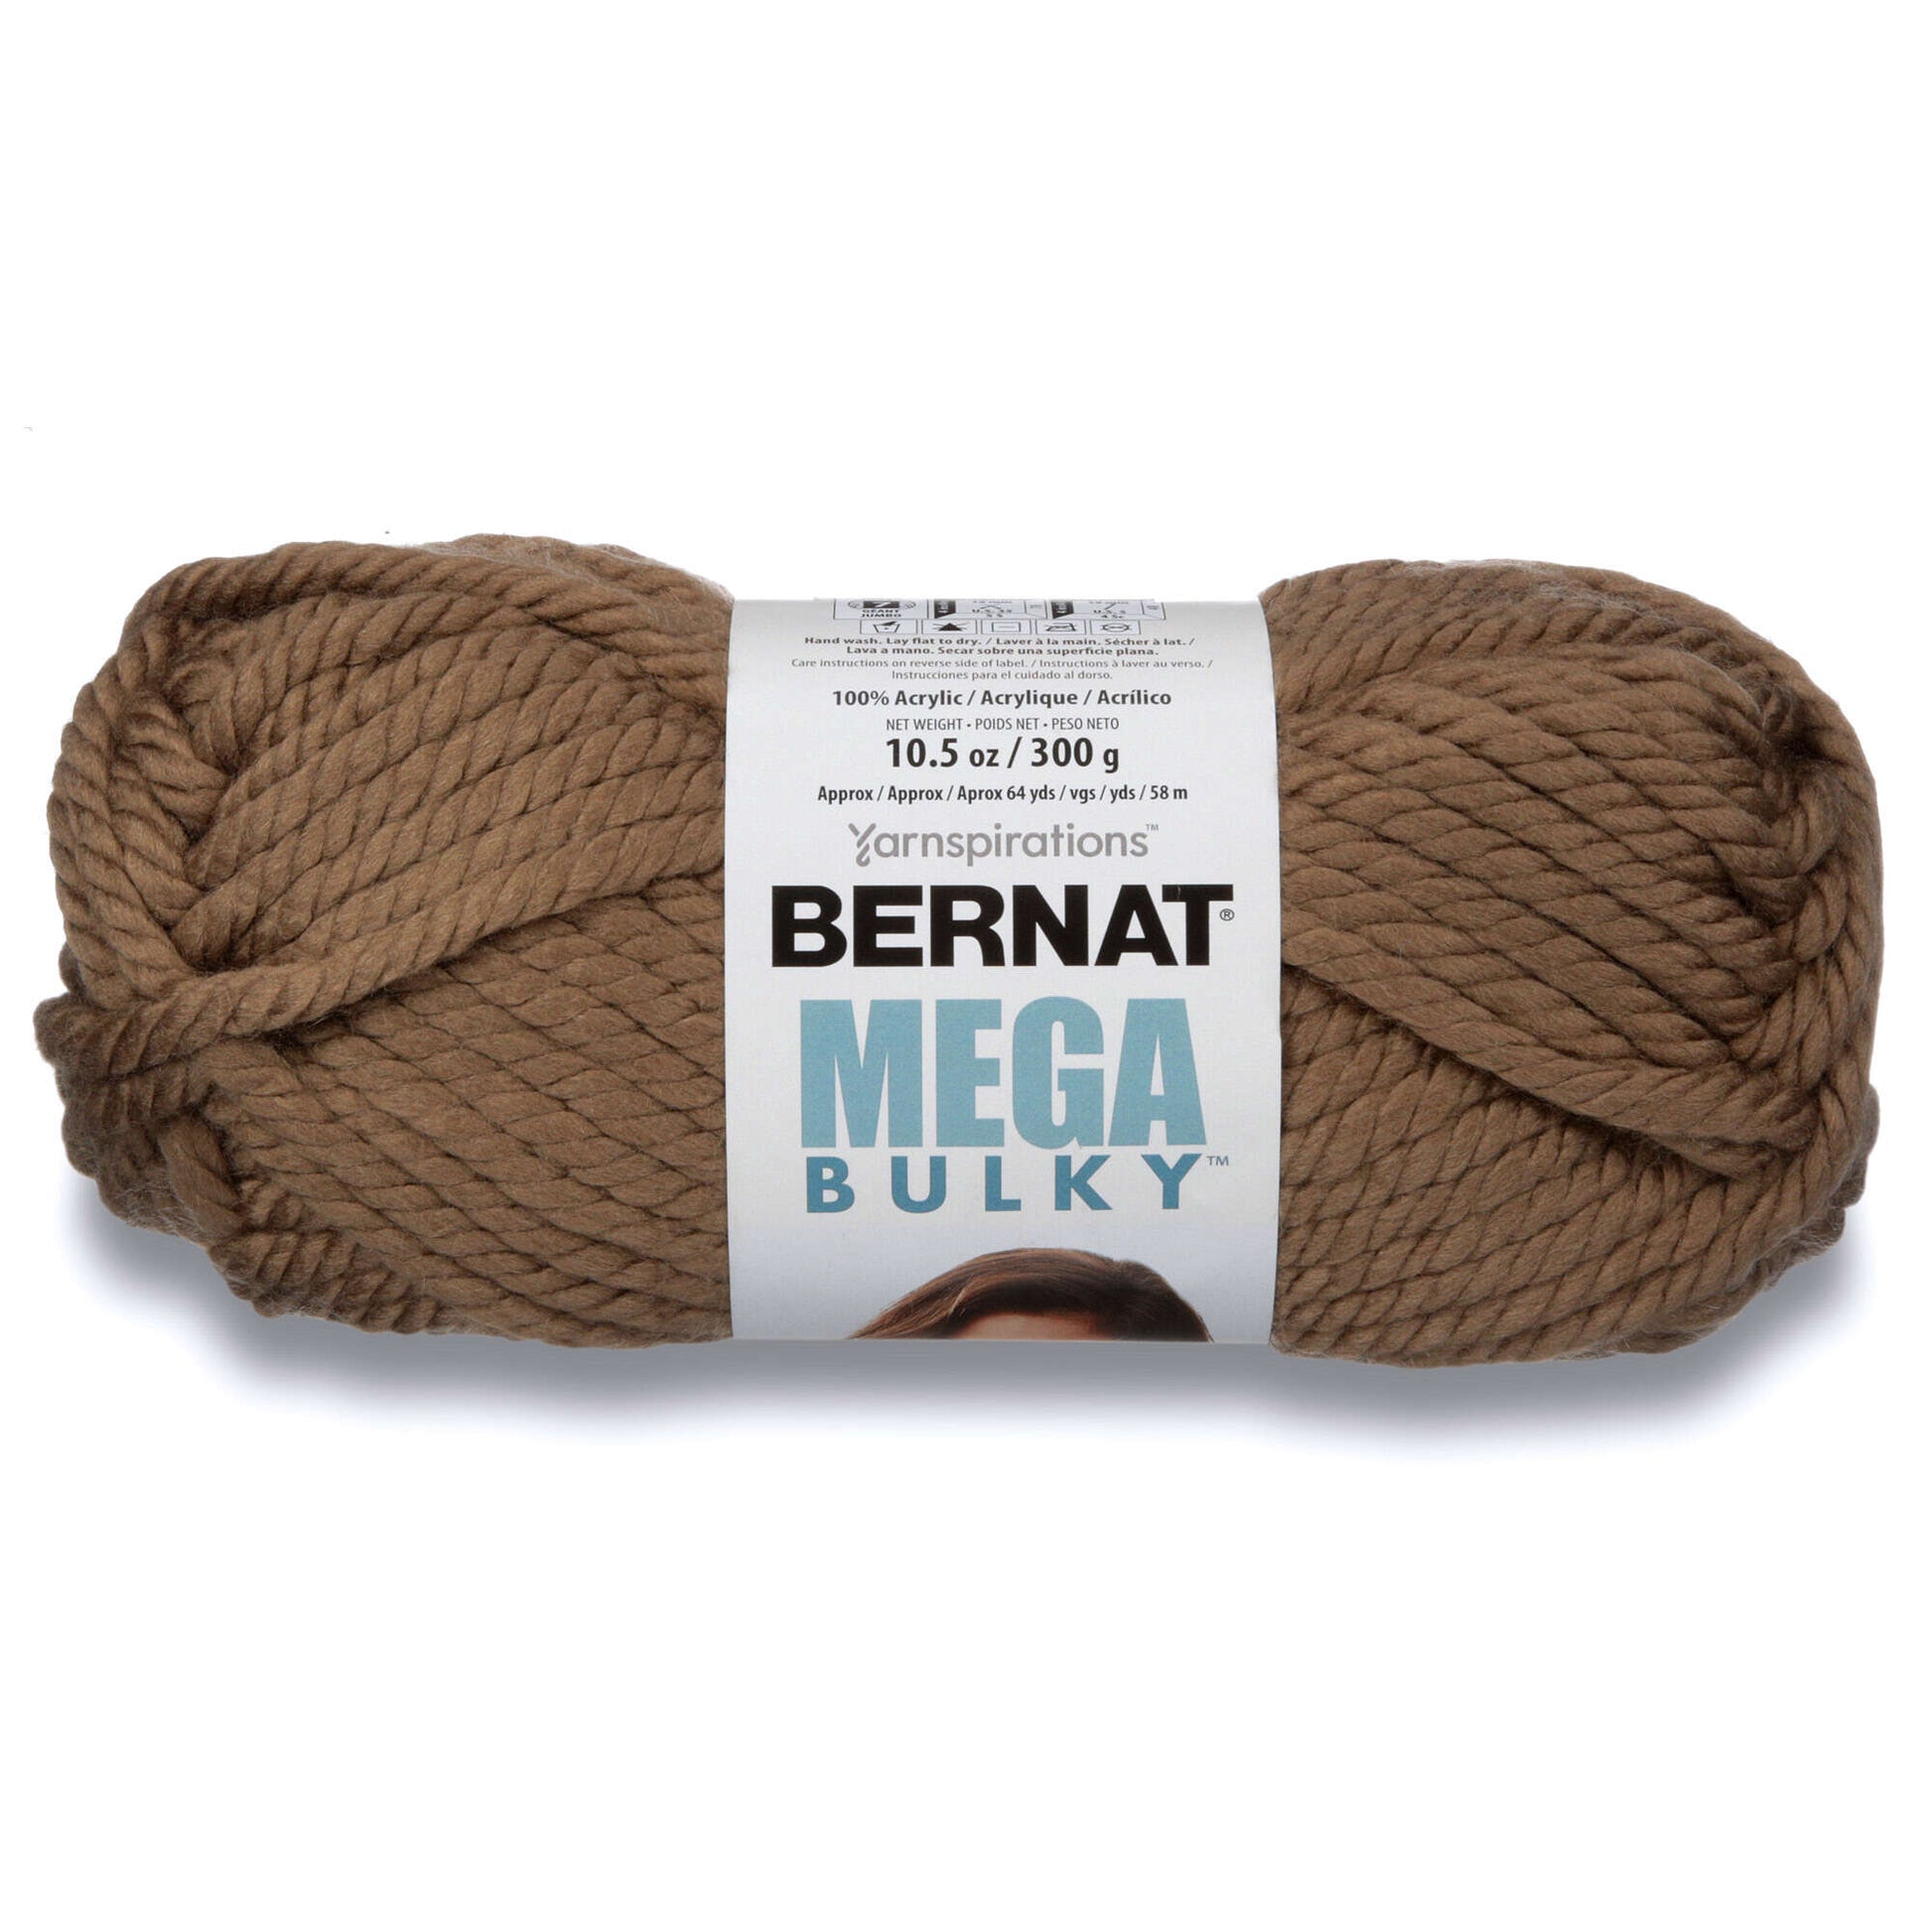 Bernat Mega Bulky Yarn (300g/10.5oz) - Discontinued Shades